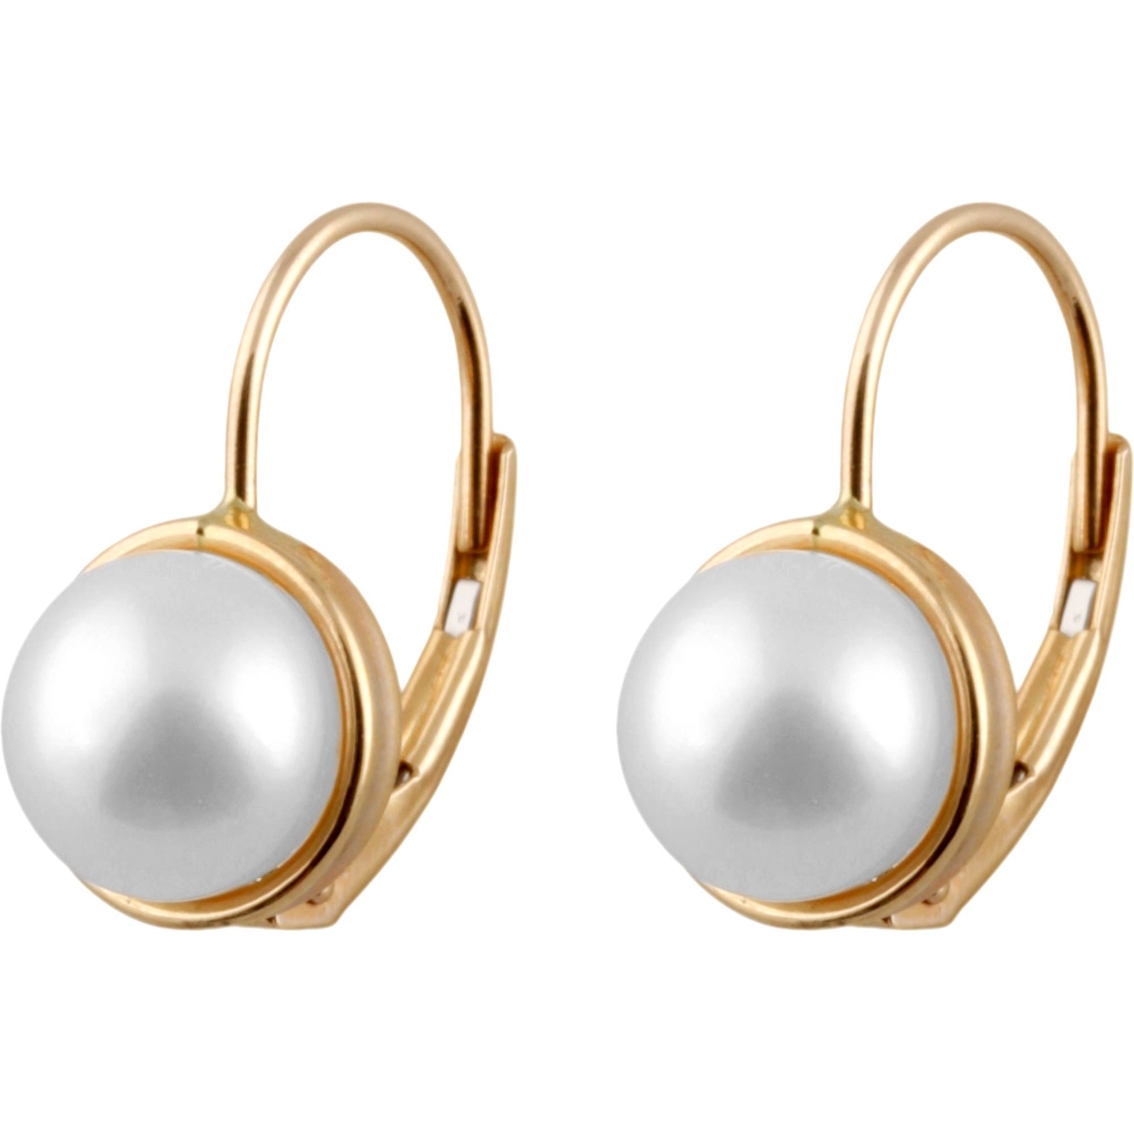 14k Gold Leverback Earrings With Freshwater Pearl | Gemstone Earrings ...